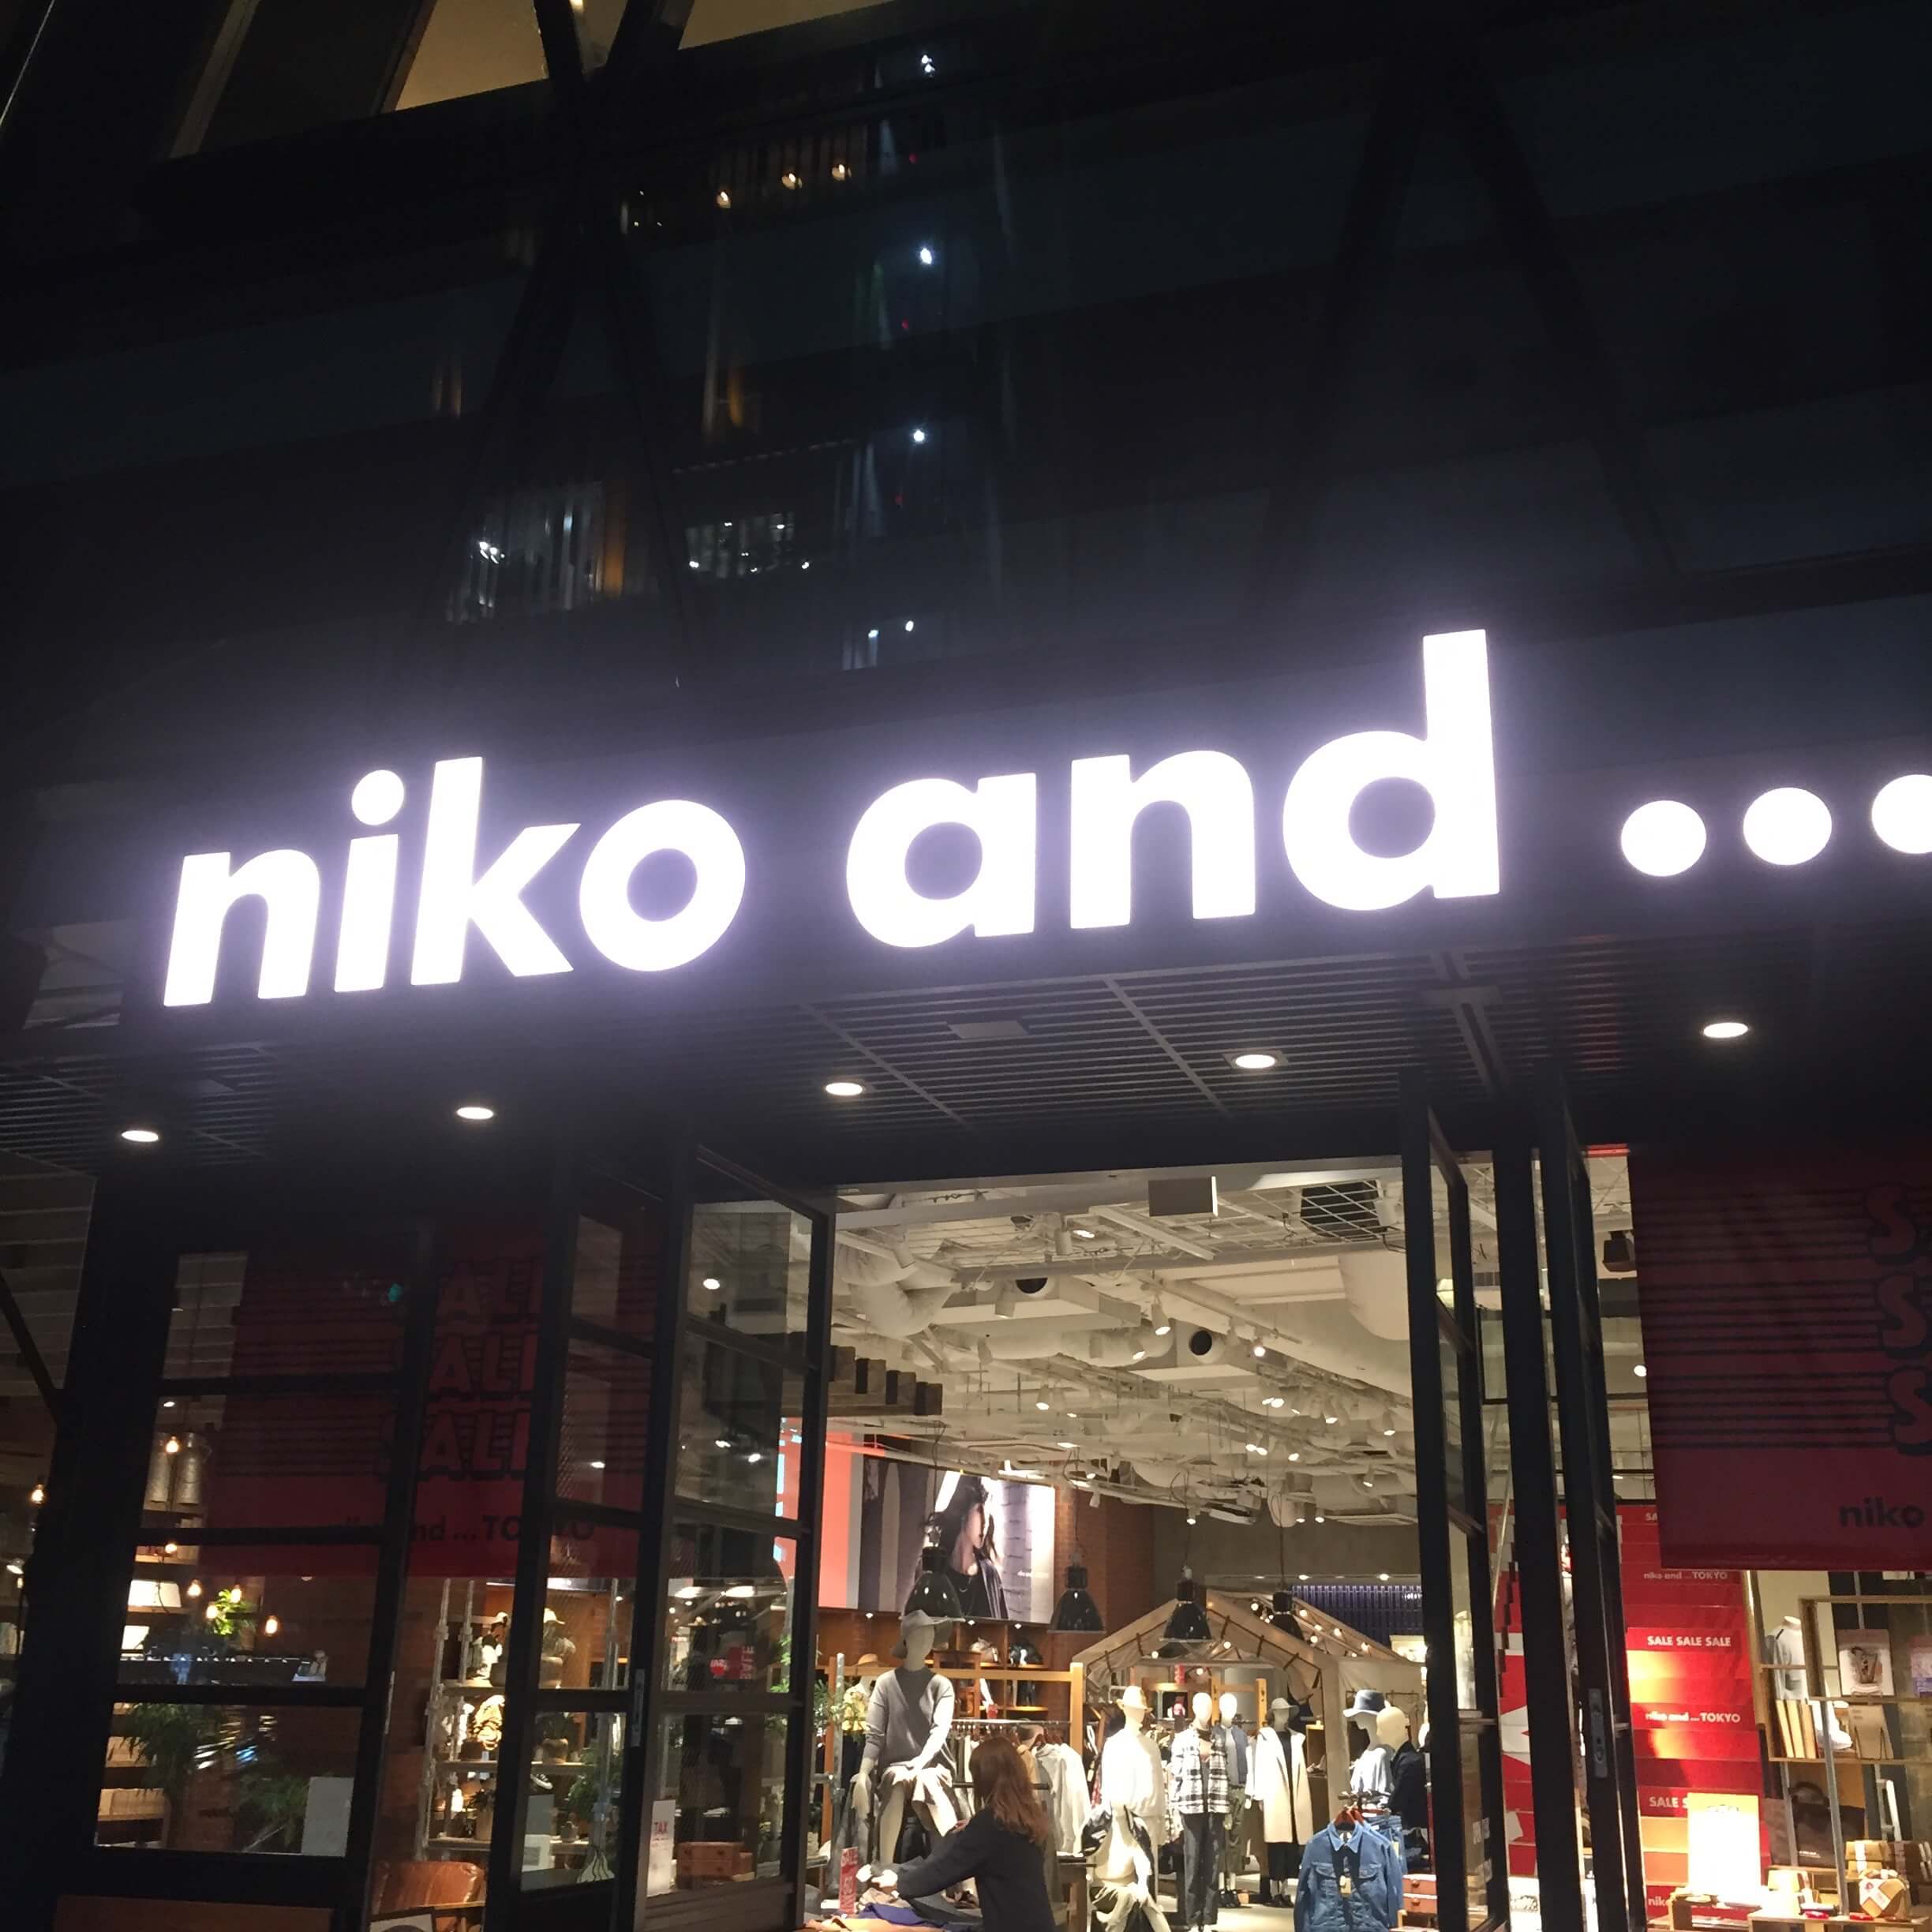 Niko-and-tokyo